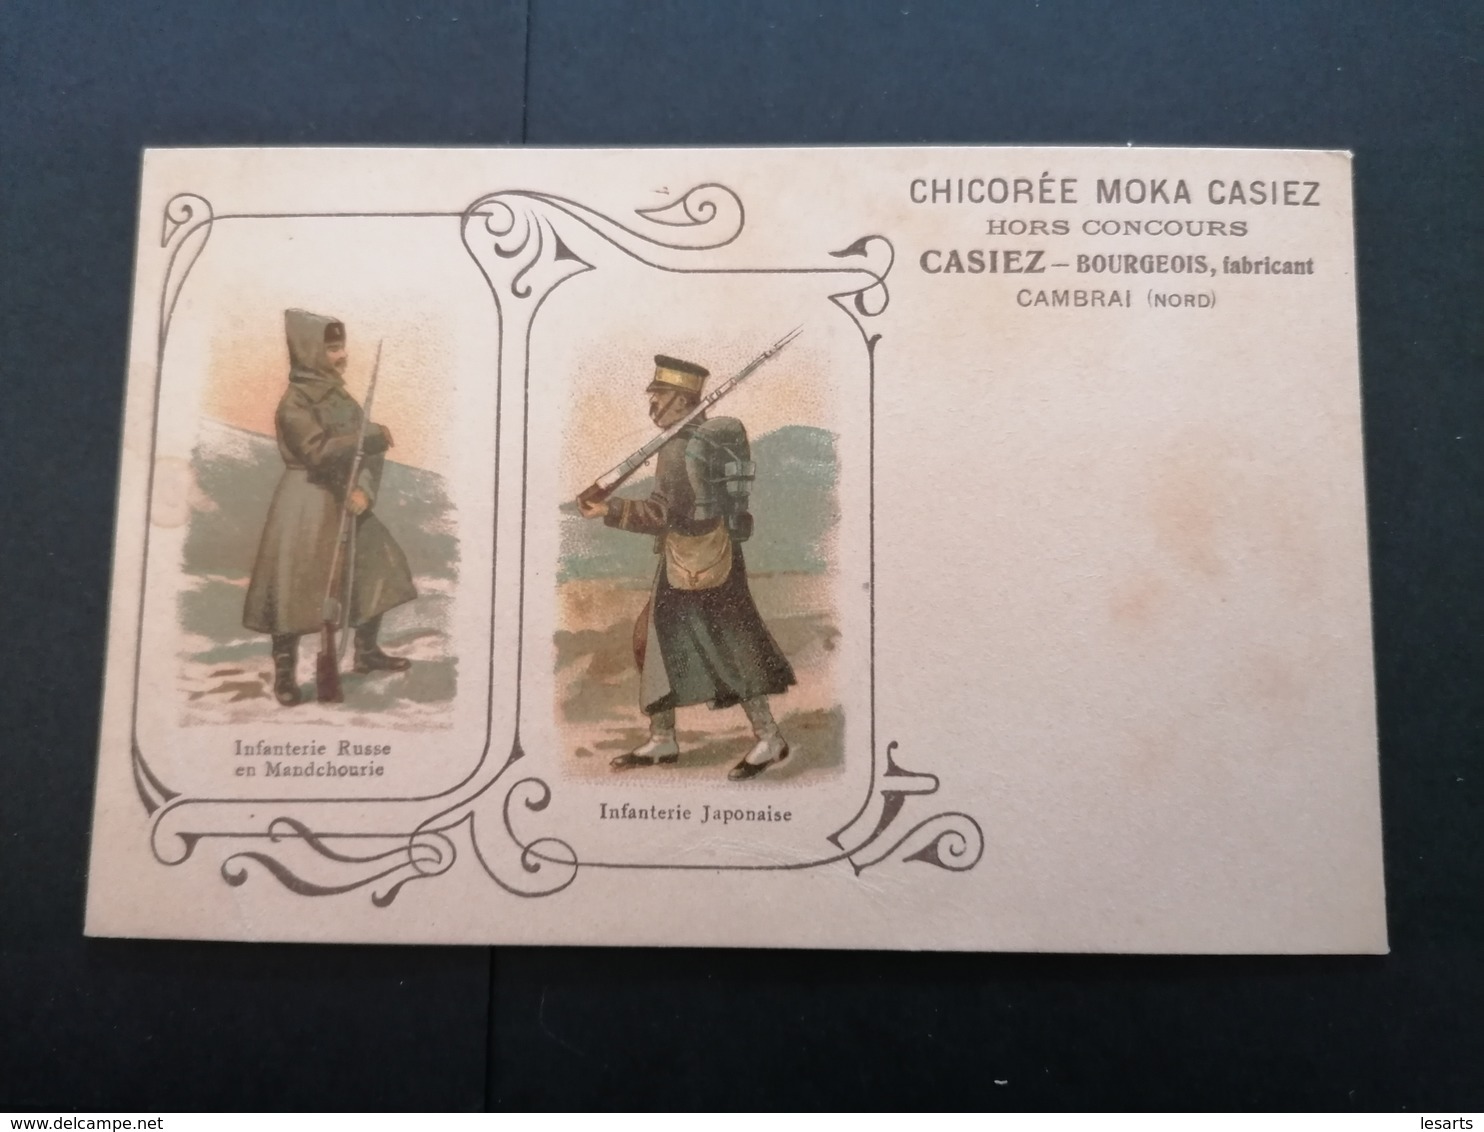 Chicorée Moka Casiez. Illustration. Infanterie. Cambrai. - Advertising